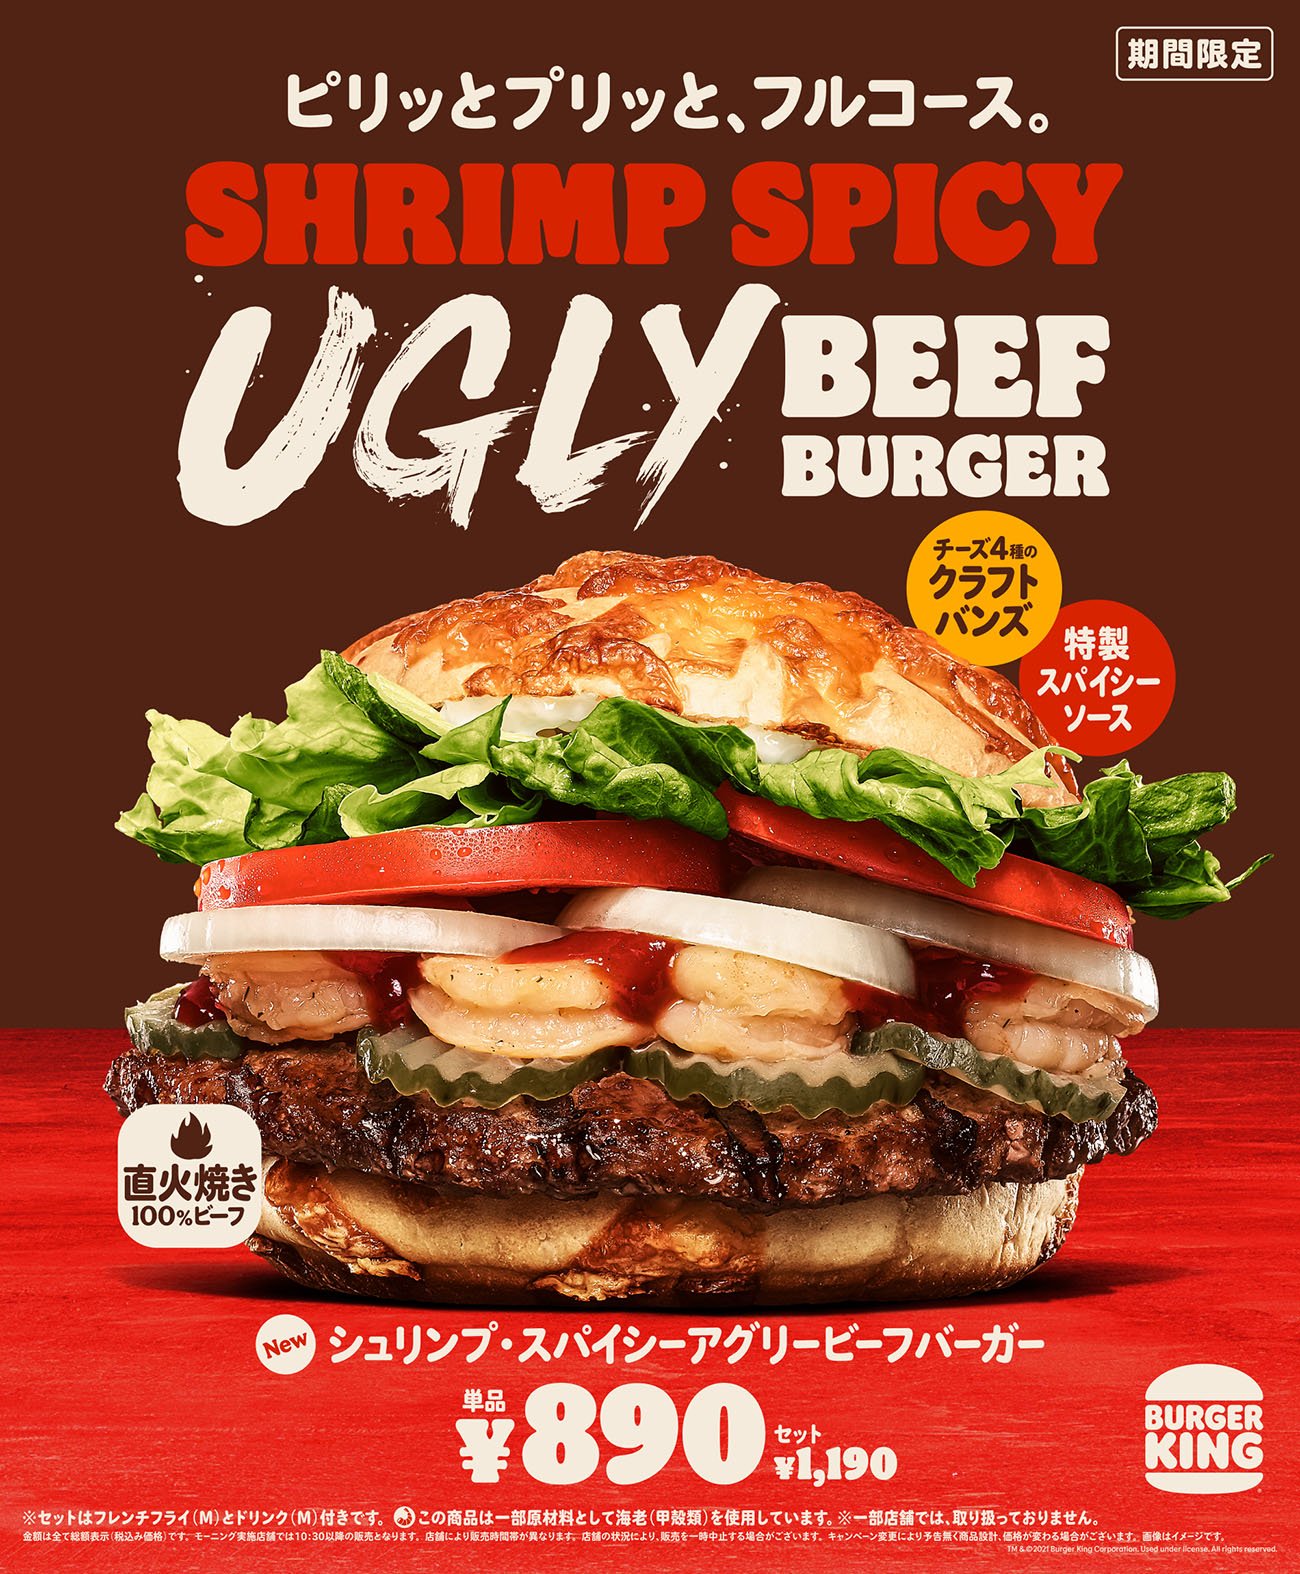 Burger King Japan - Shrimp Spicy Ugly Beef Burger